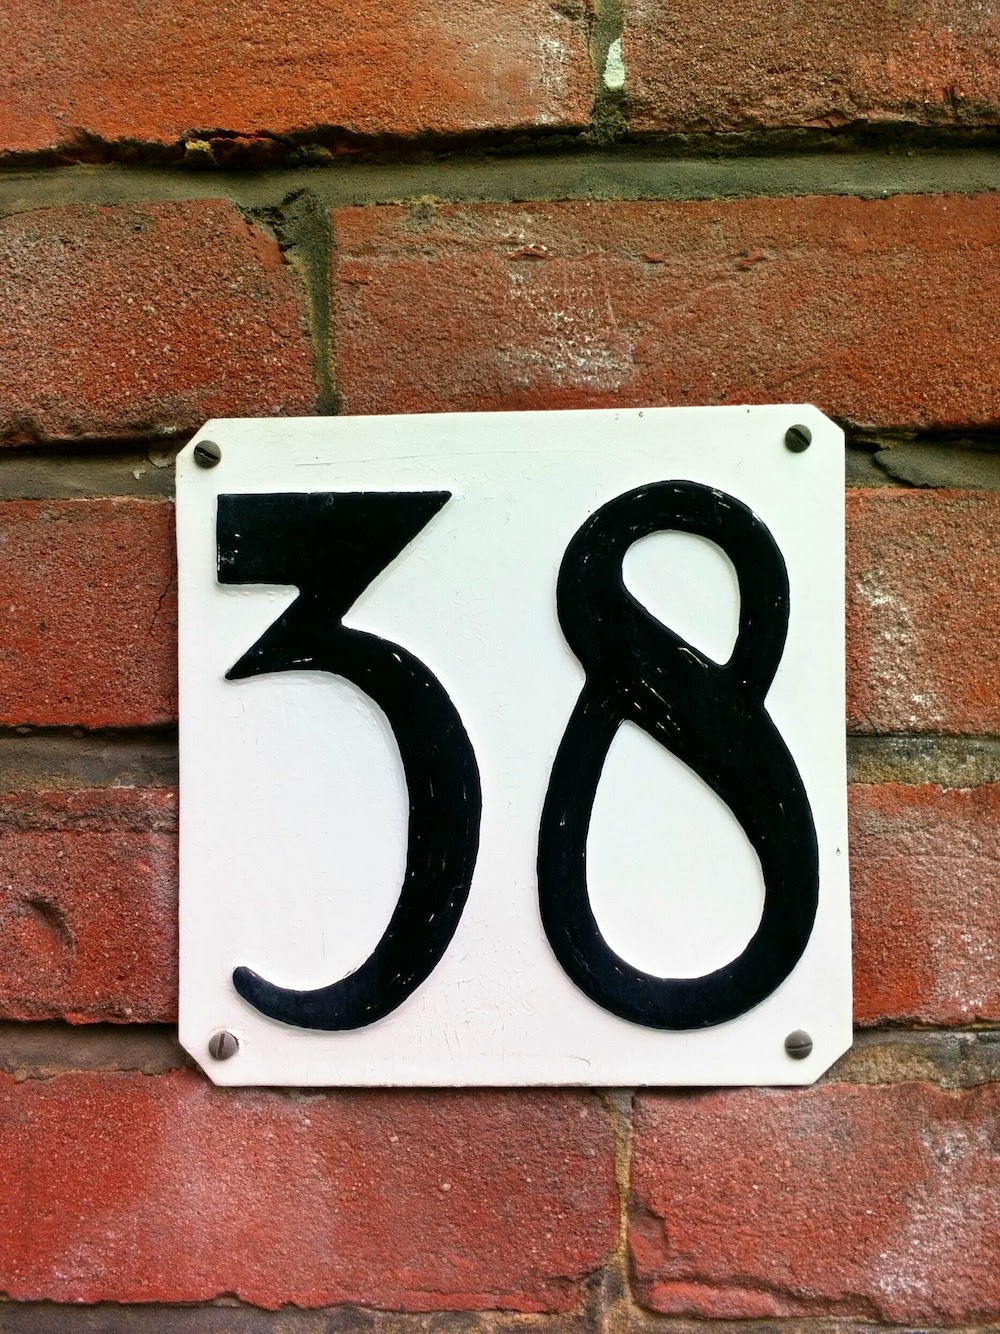 Original house number plate